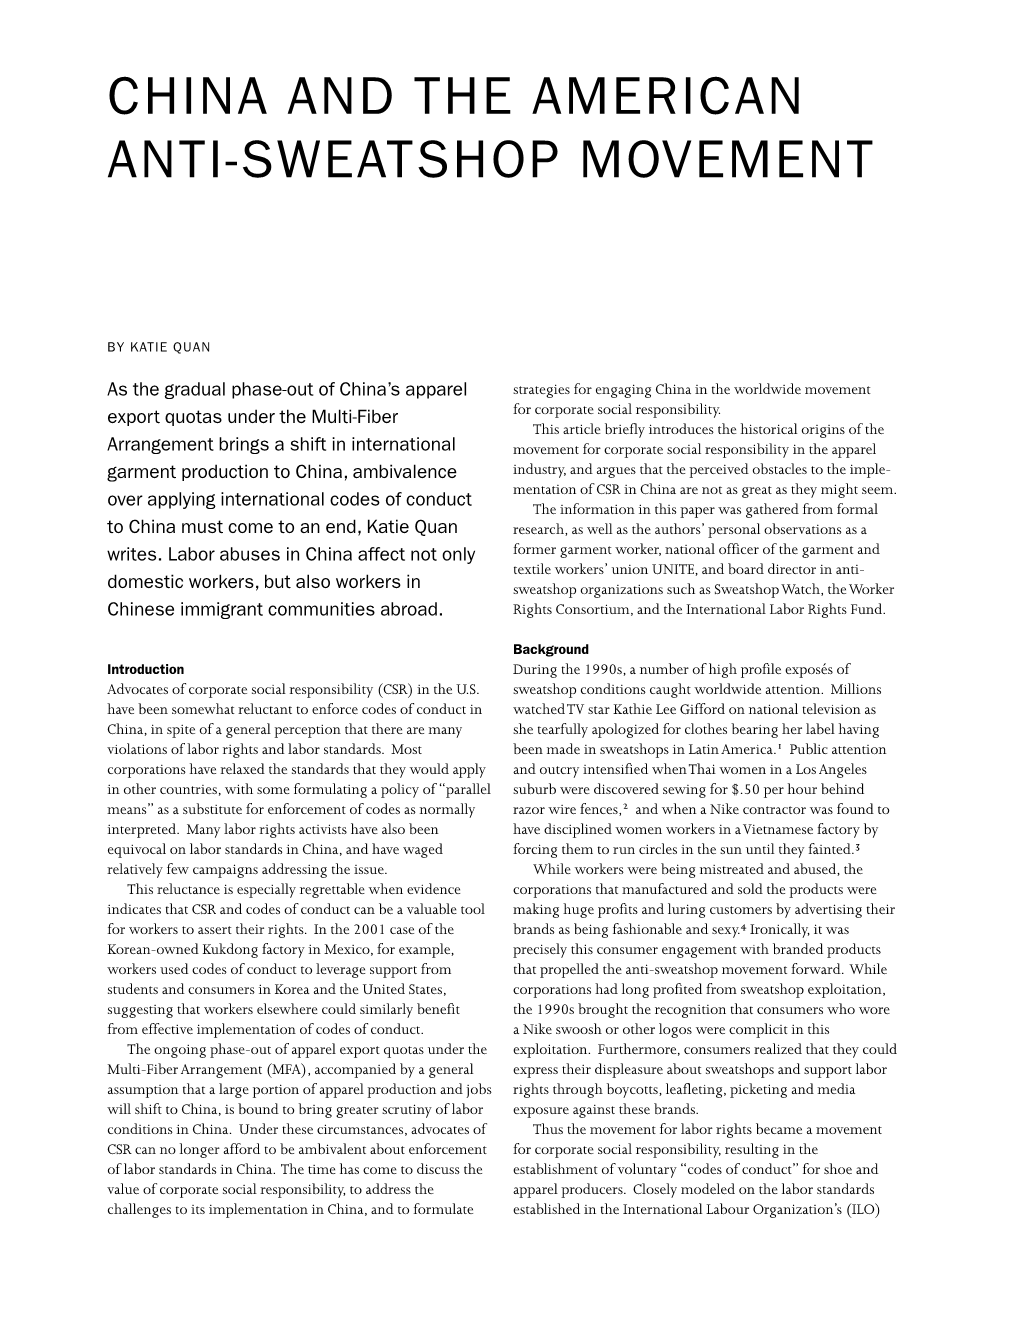 China and the American Anti-Sweatshop Movement